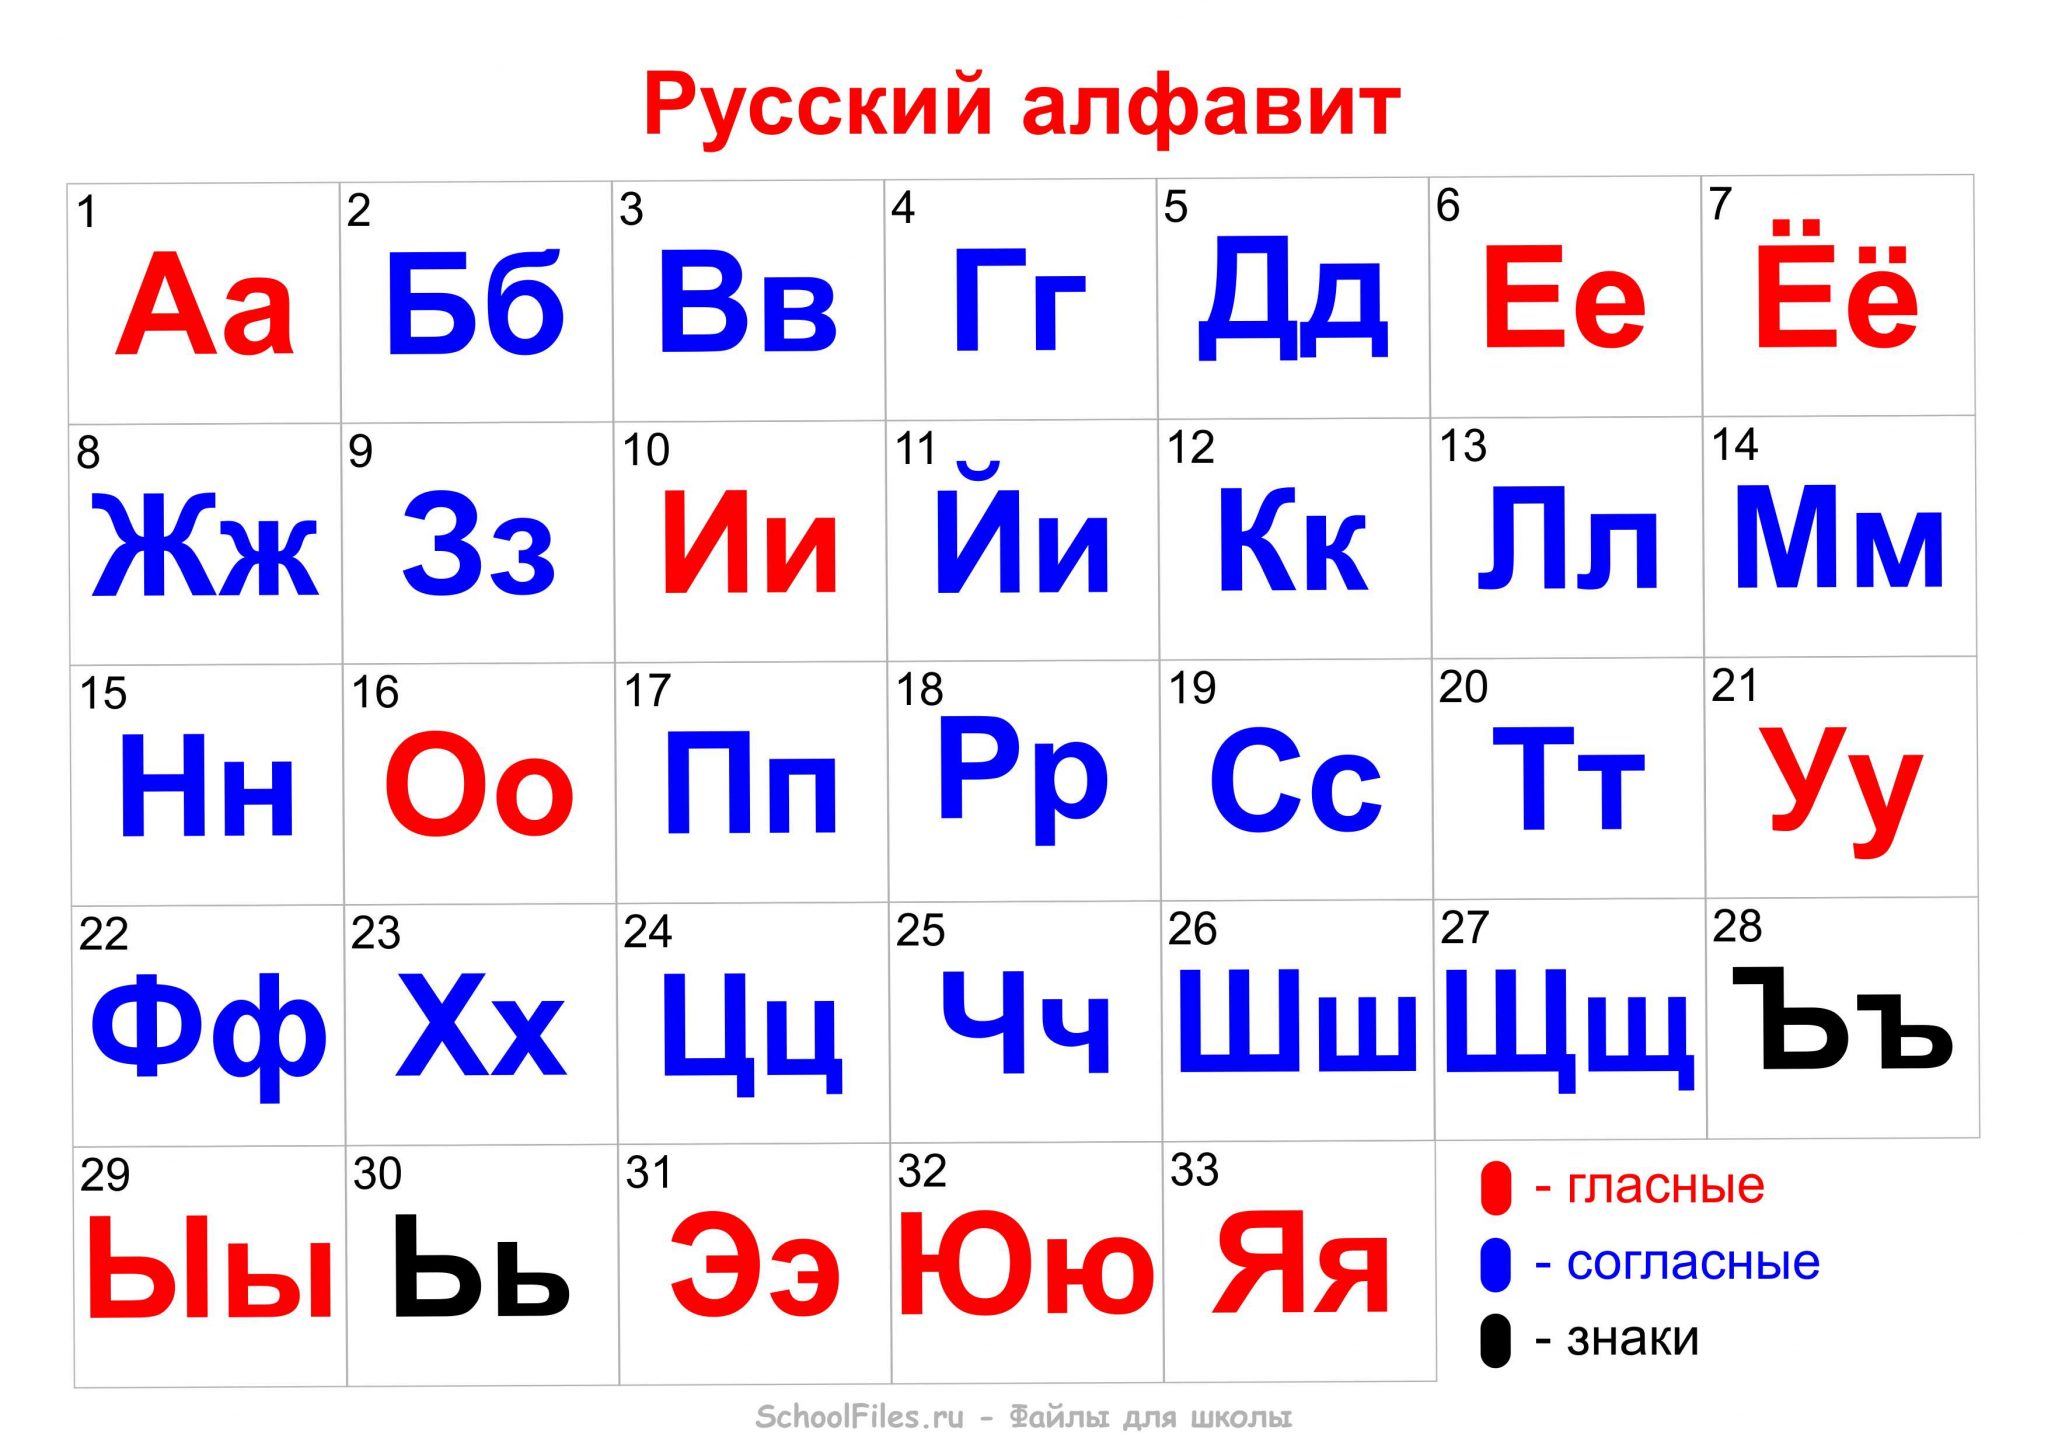 Русский алфавит: картинка